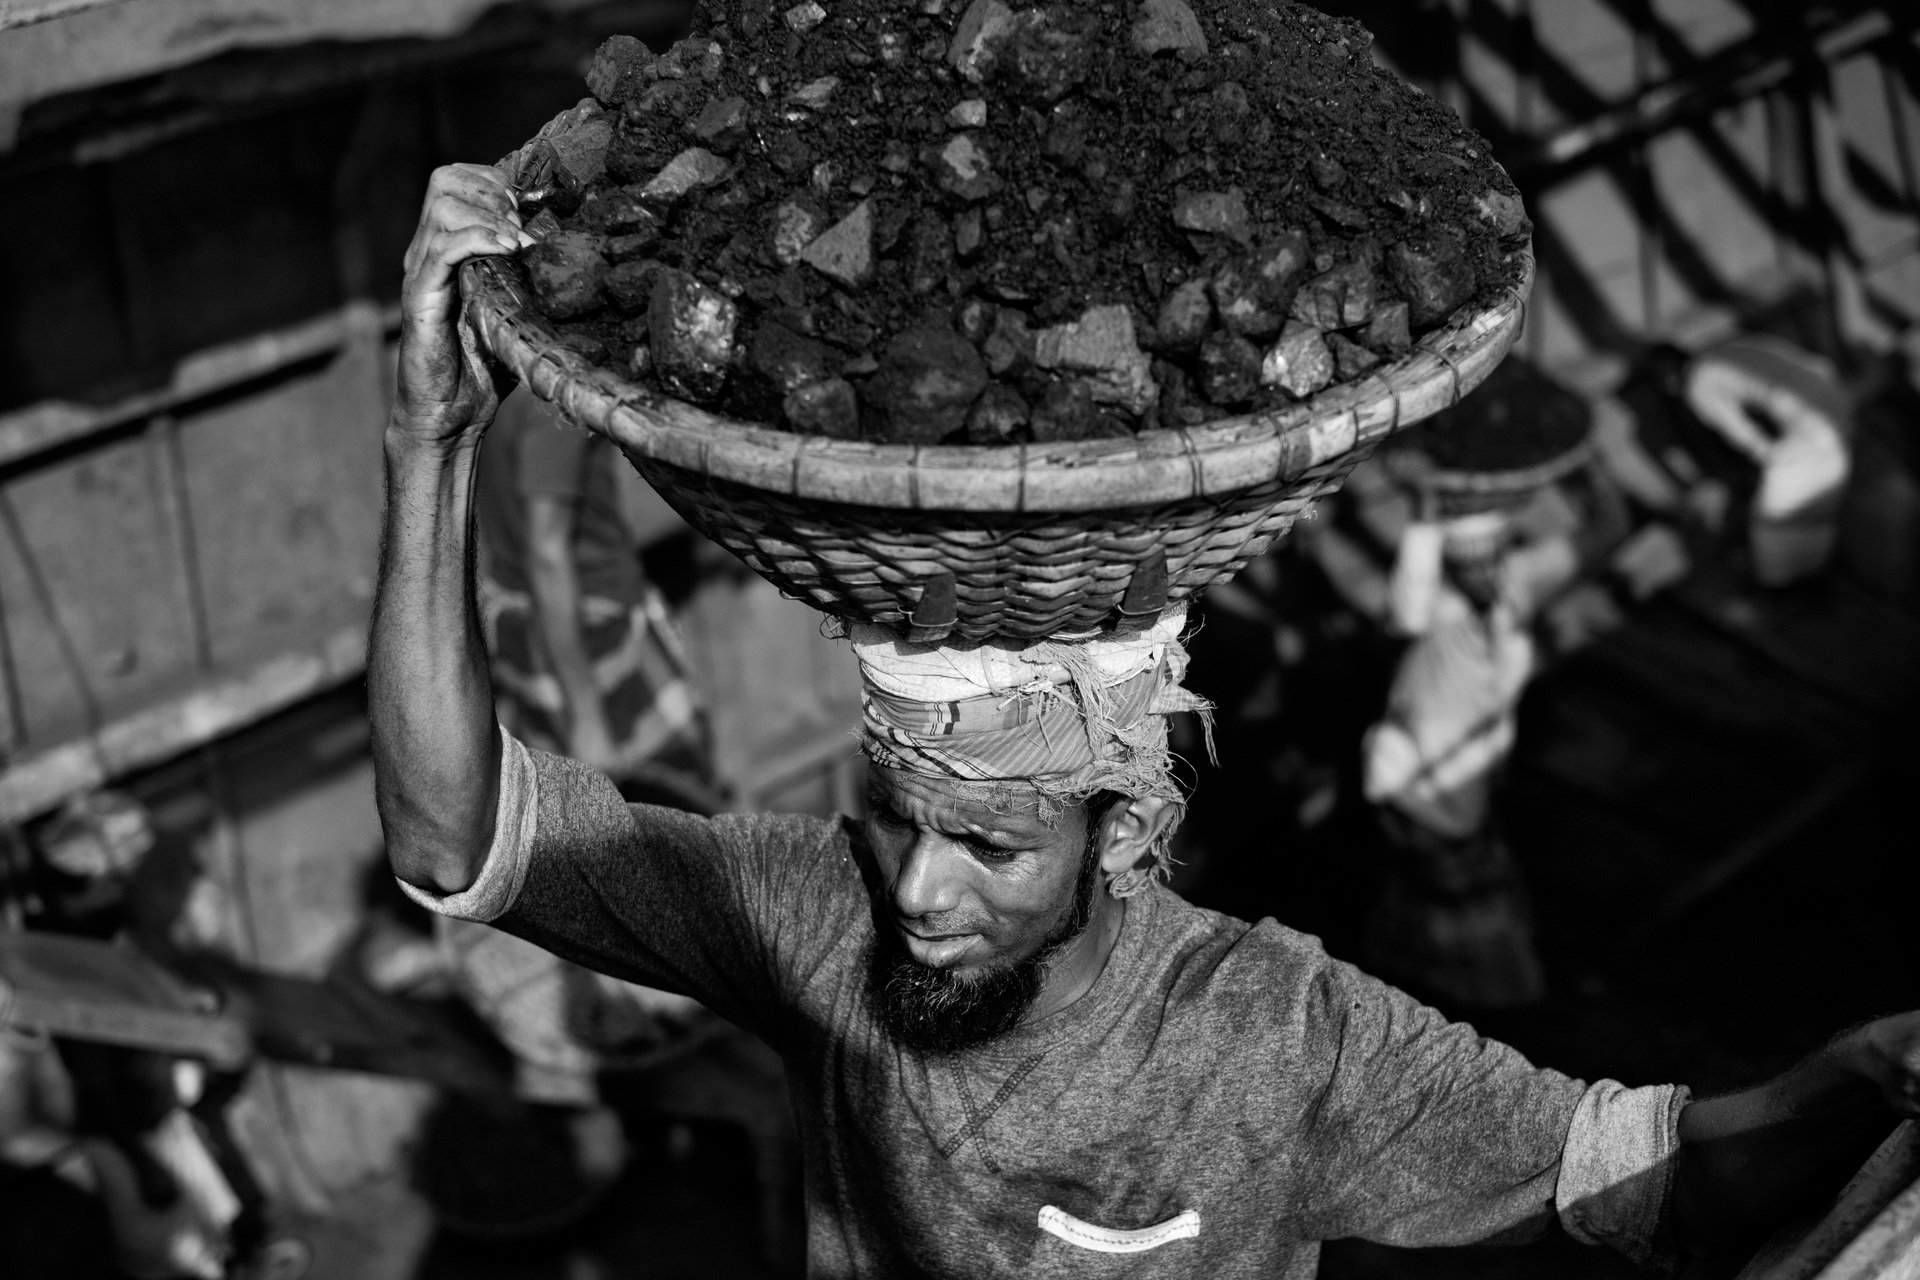 Bangladesh: Unloading Coal